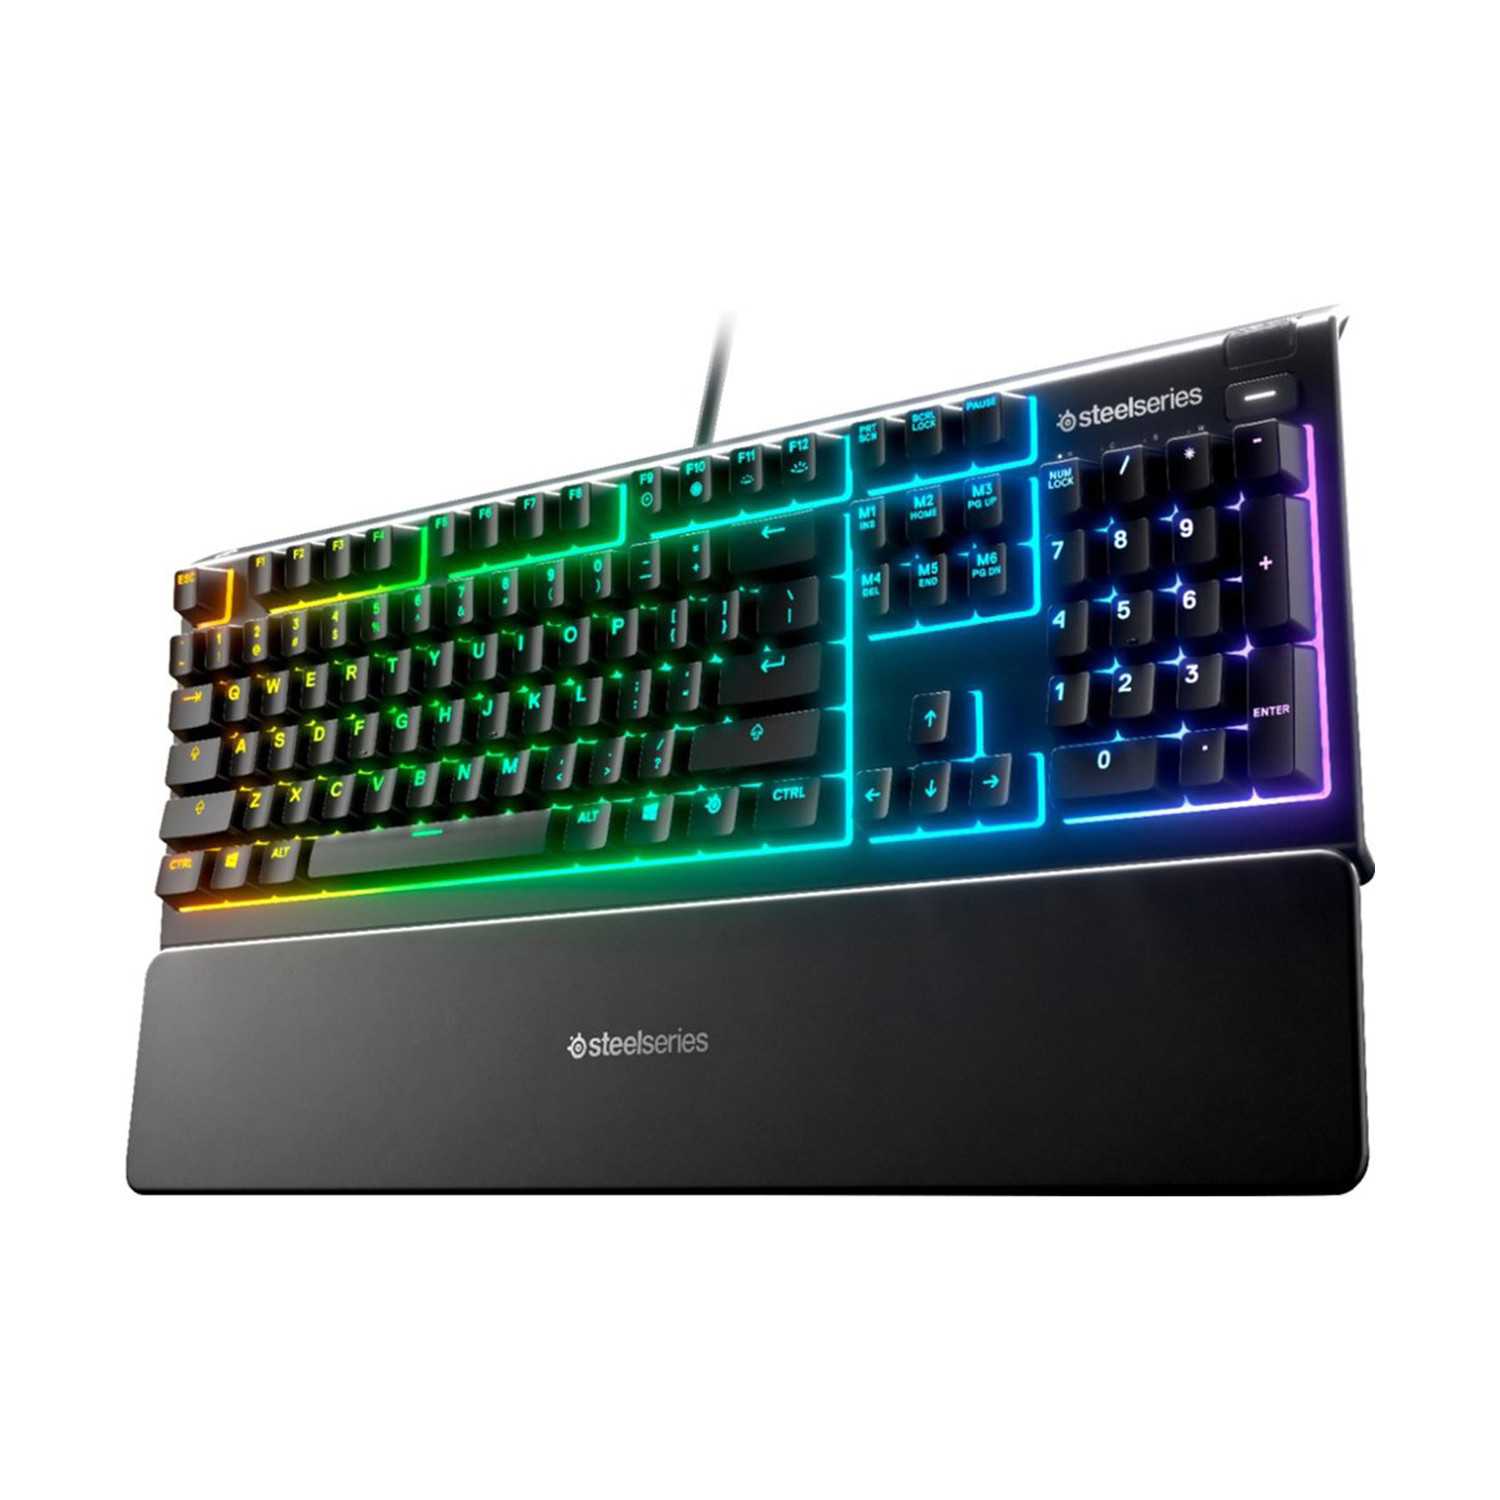 Steelseries apex [raw] gaming keyboard black usb отзывы покупателей и специалистов на отзовик